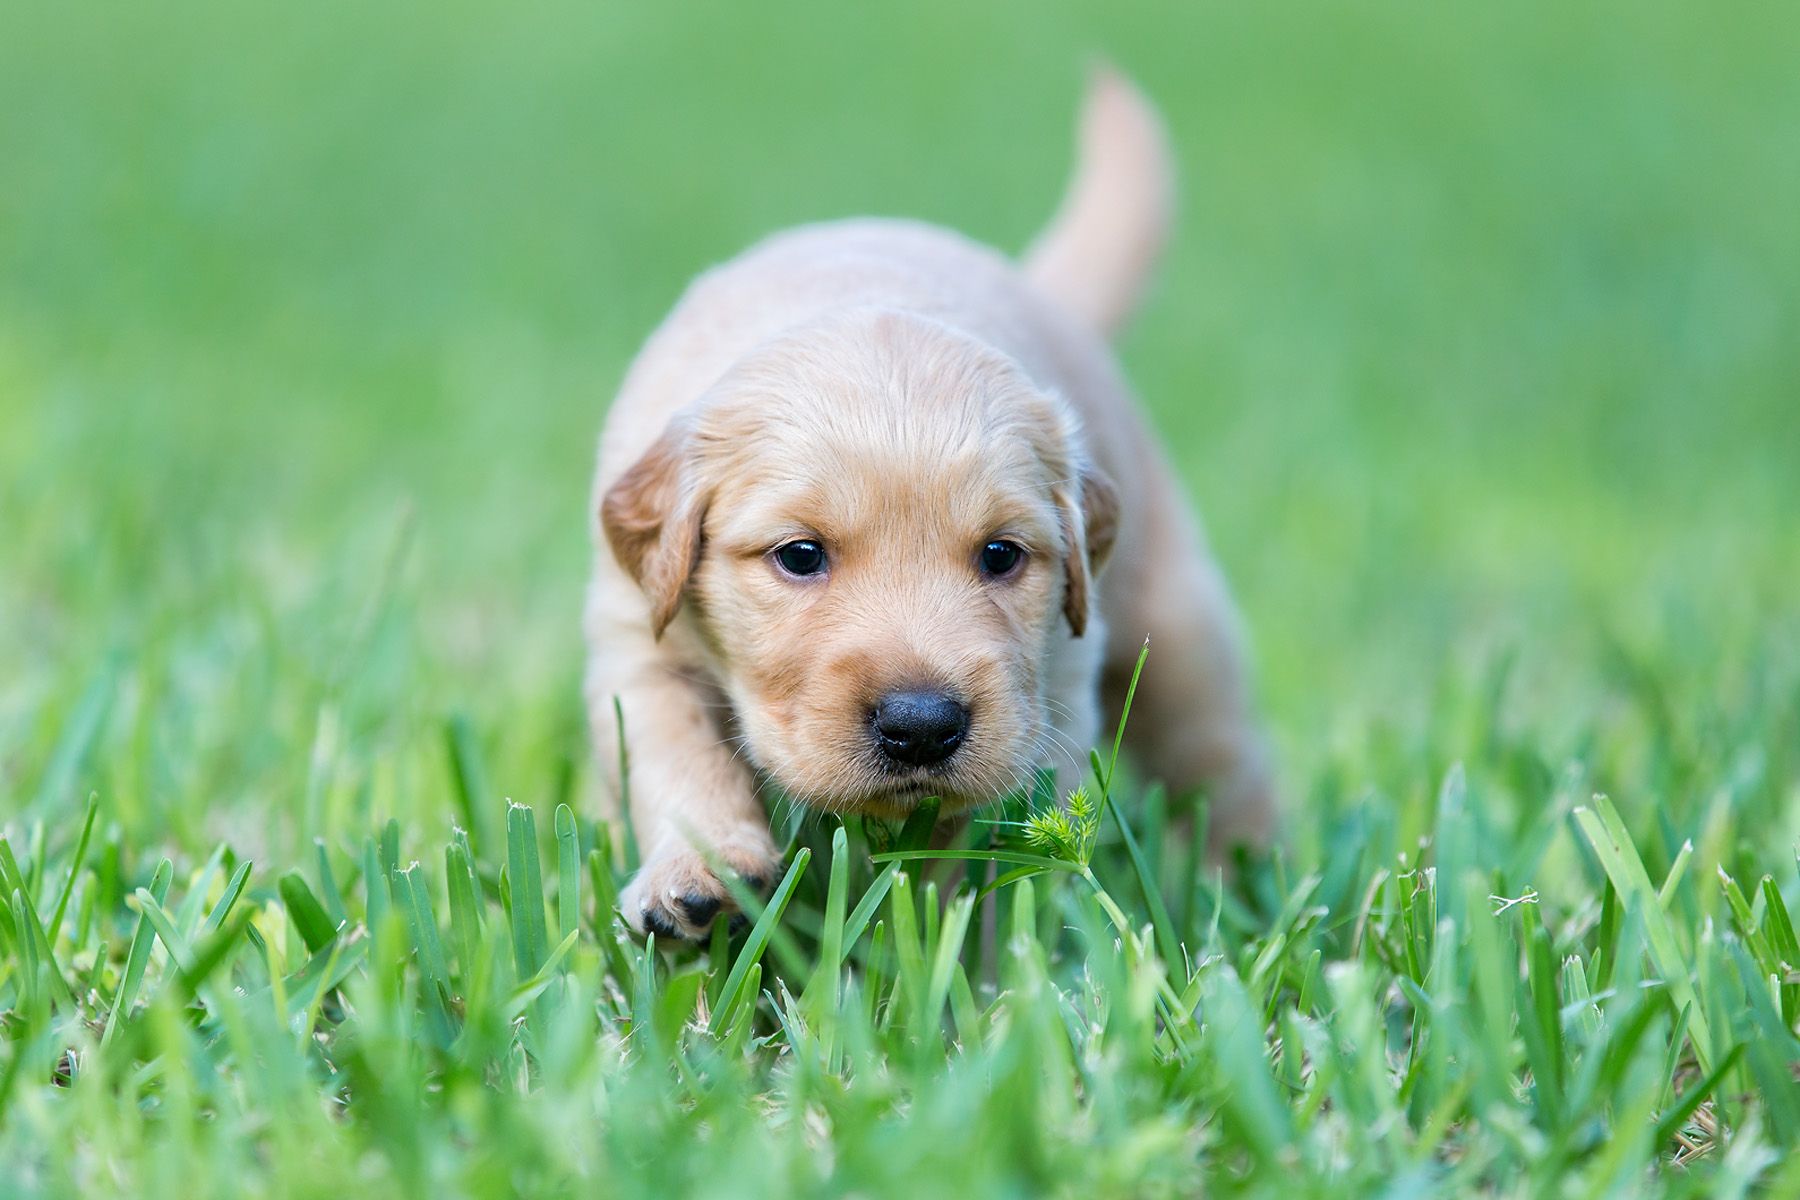 Golden Retriever pup chasing grass_B8R3066-Lake Worth, FL, USA.jpg